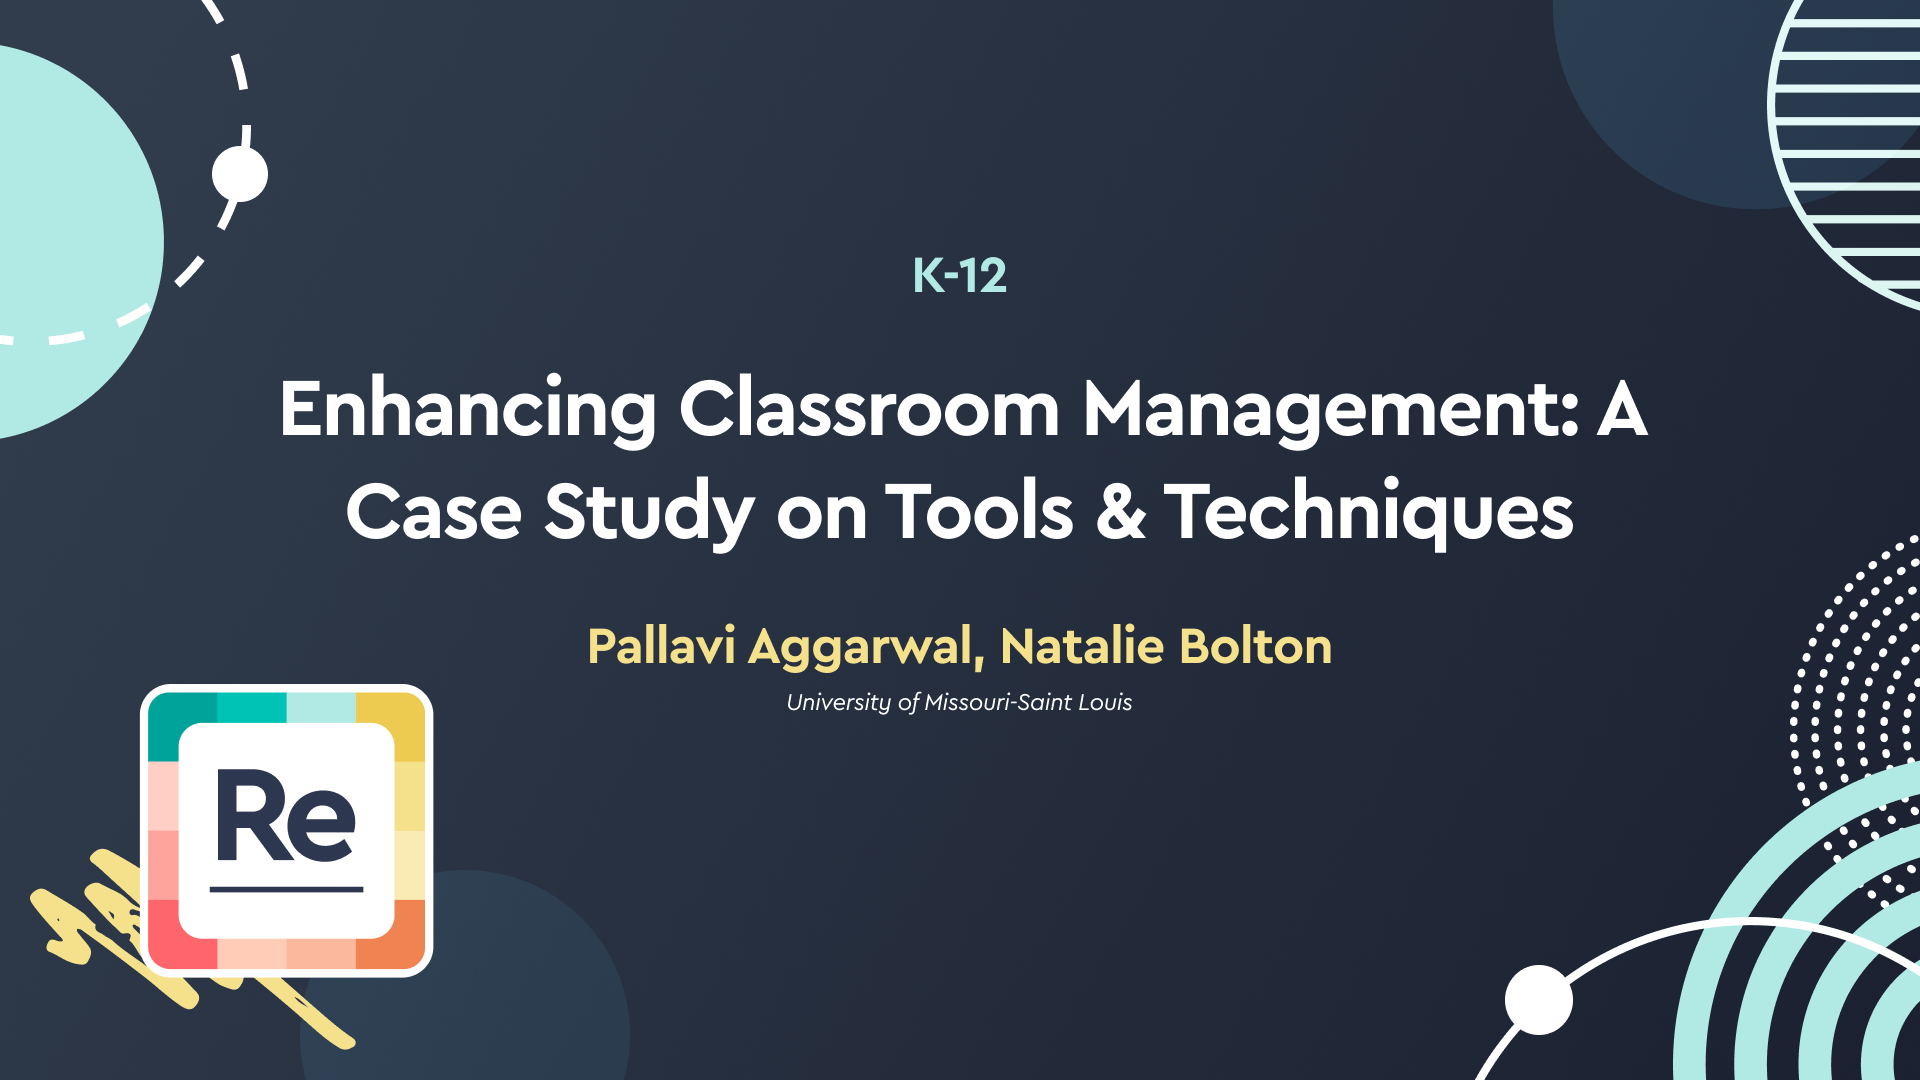 Enhancing Classroom Management: A Case Study on Tools & Techniques